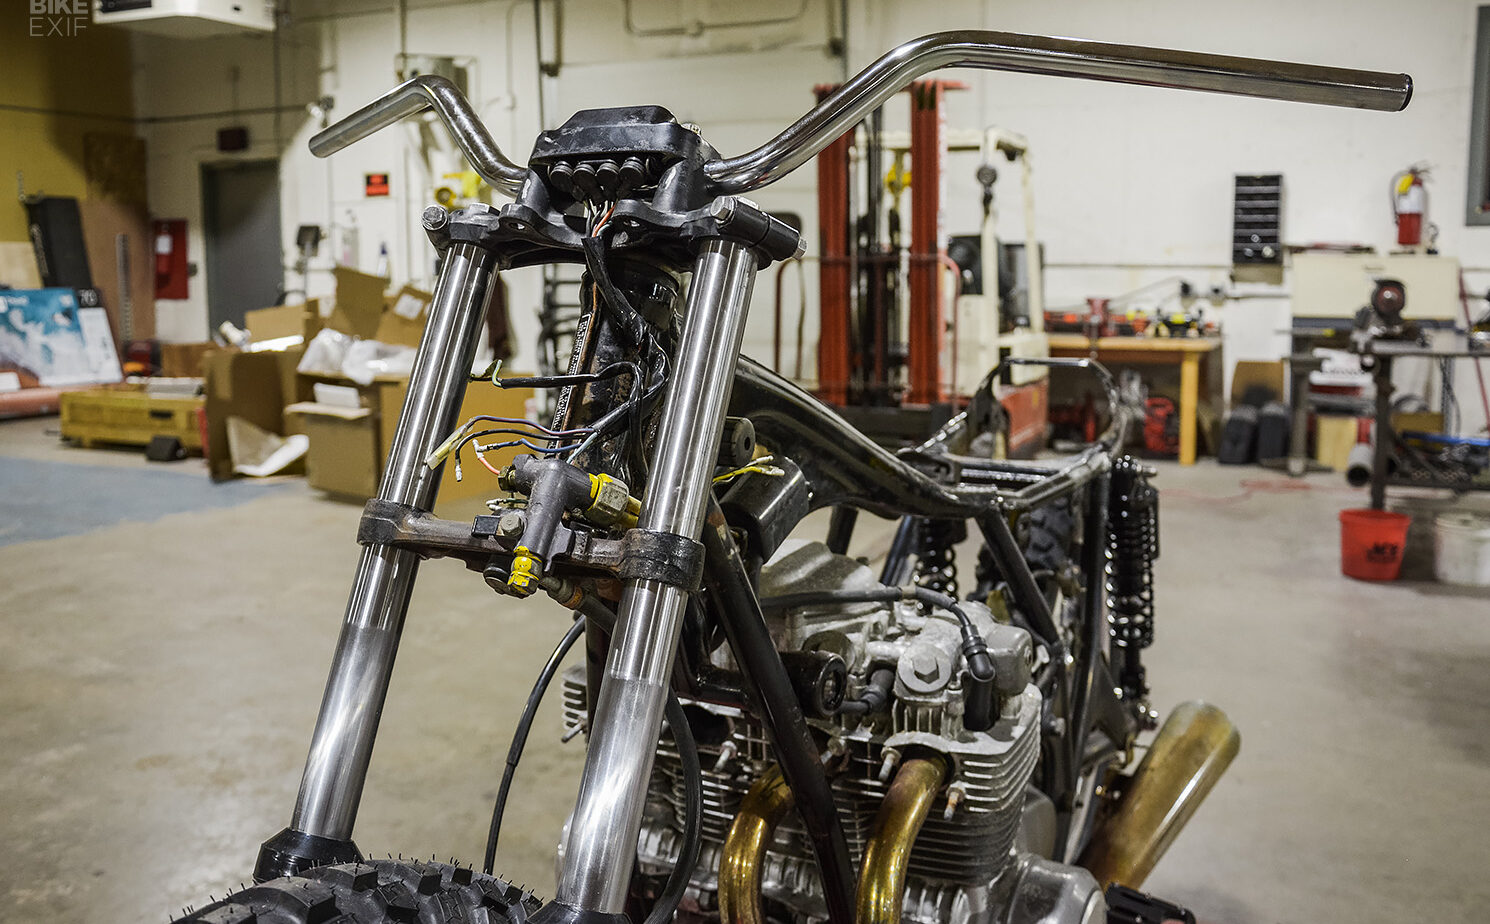 Rebuilding motorcycle forks